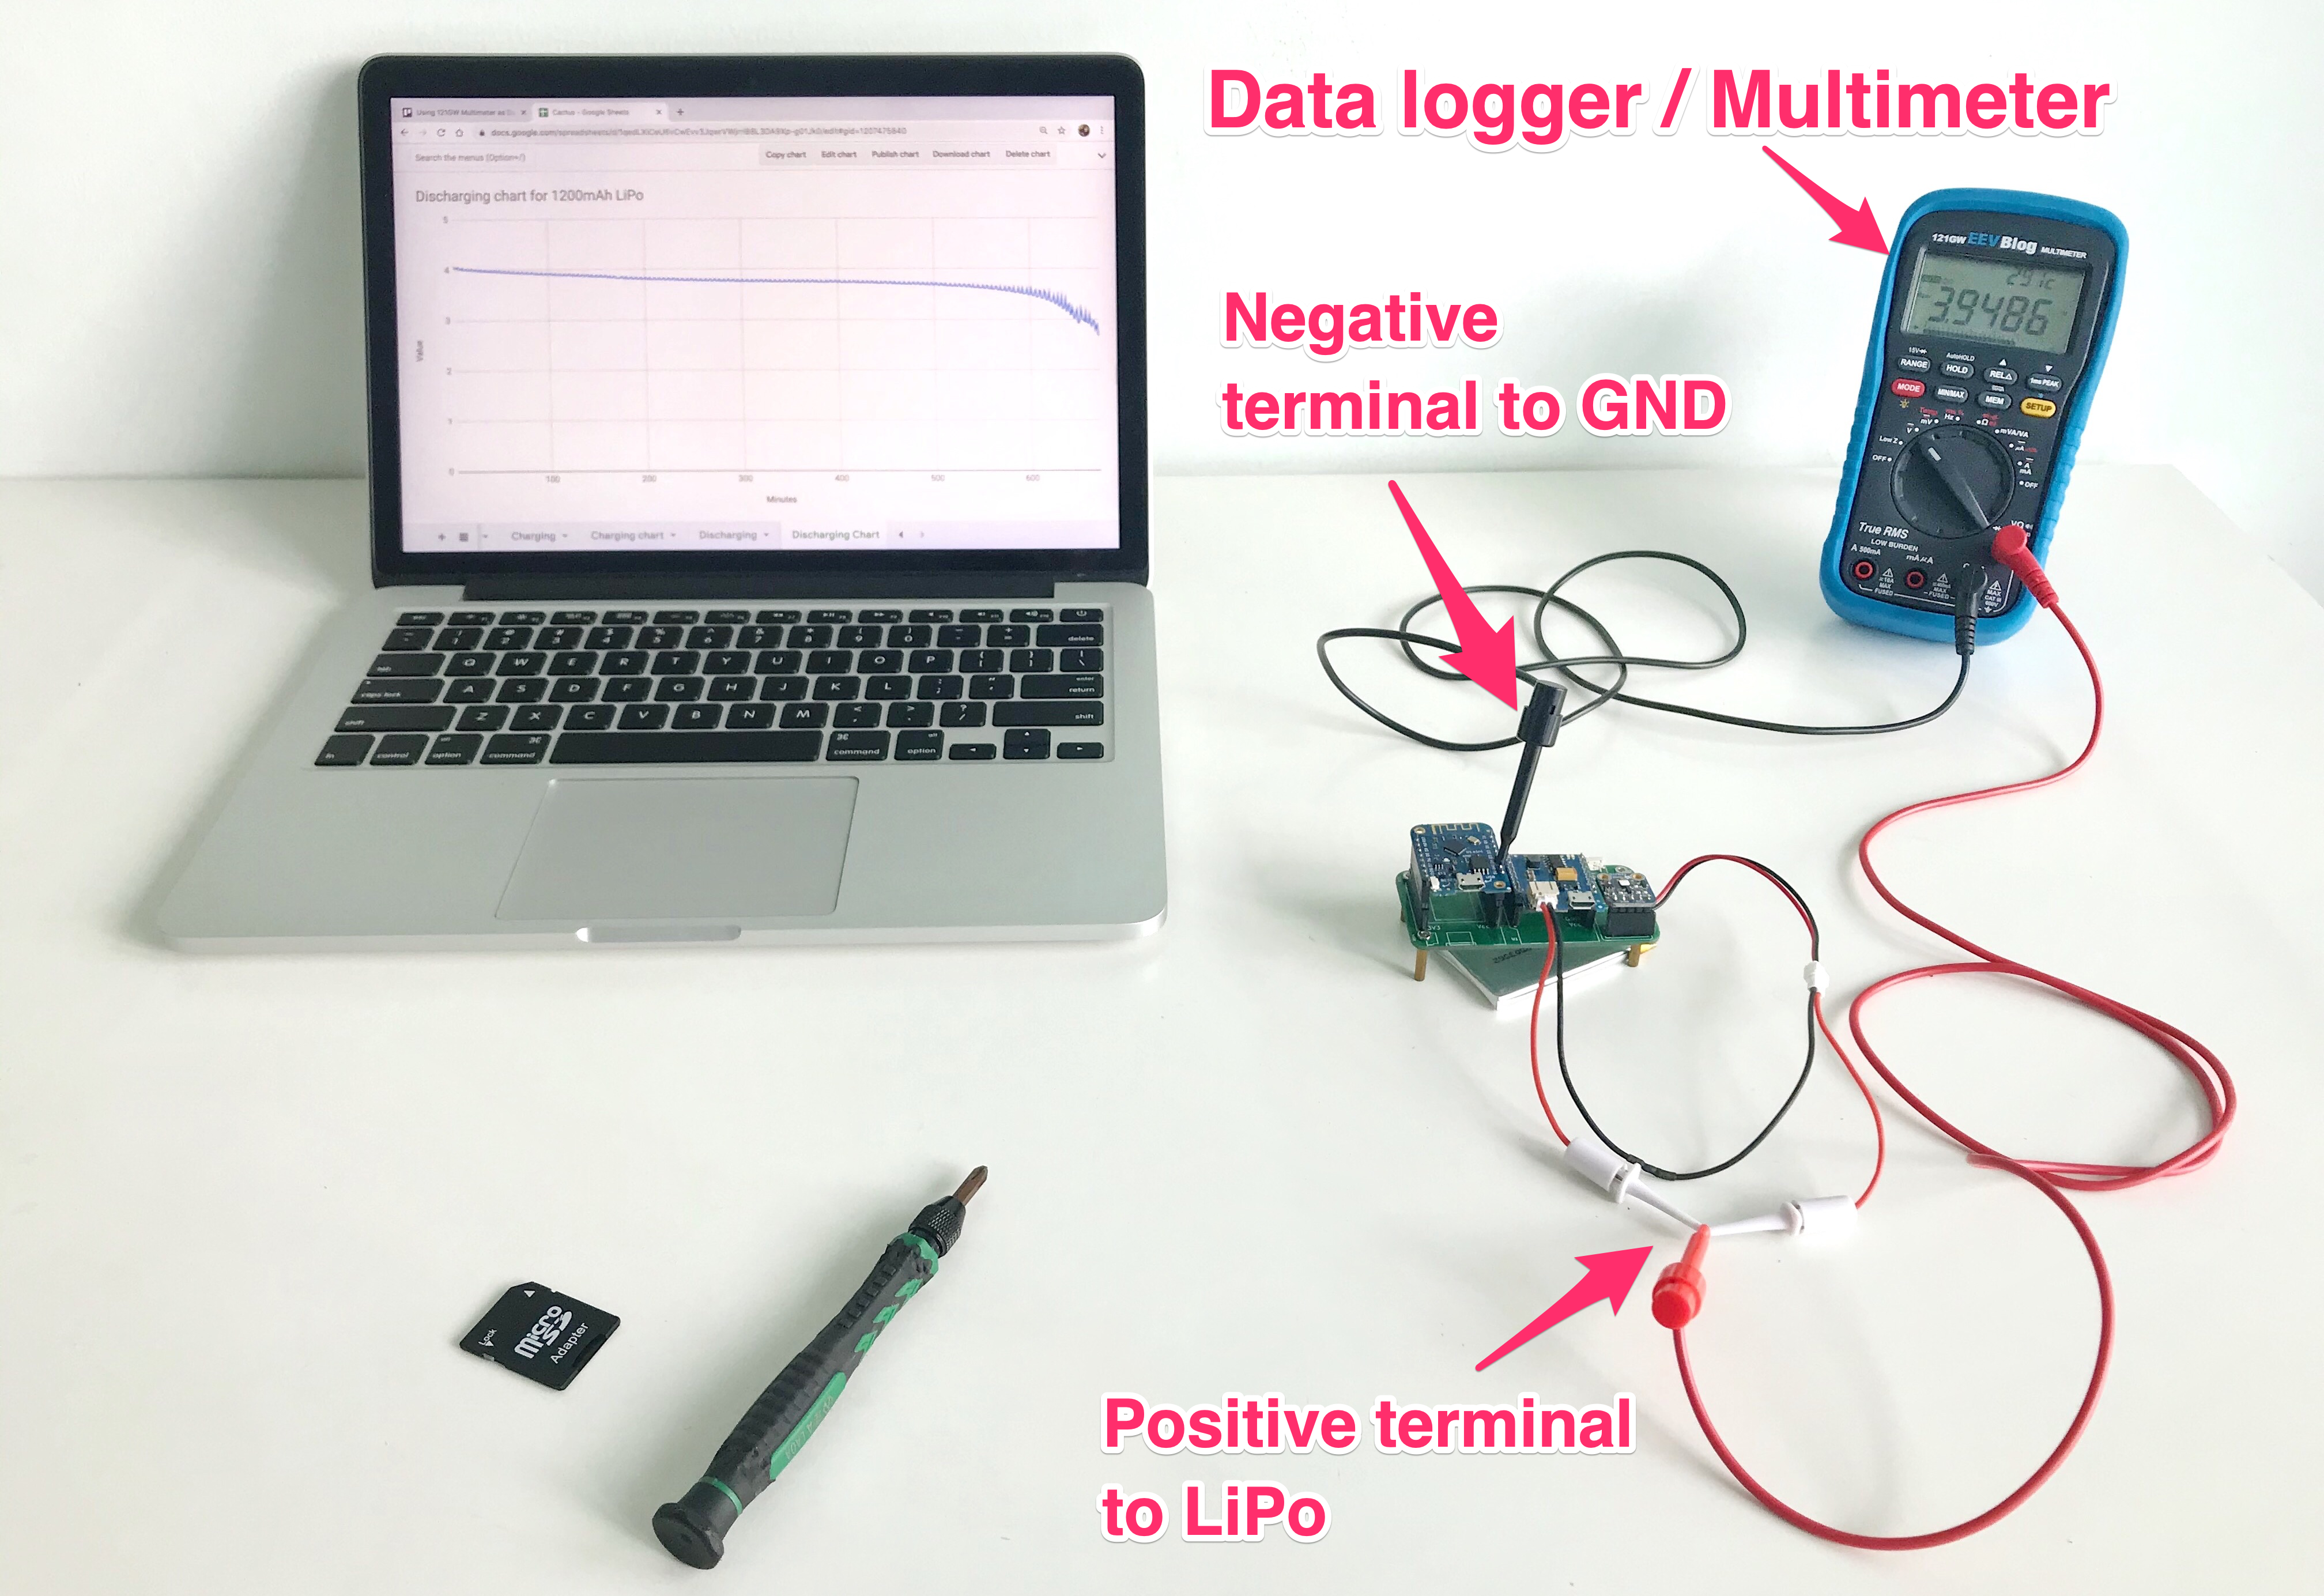 Using 121GW multimeter as a data logger prototype